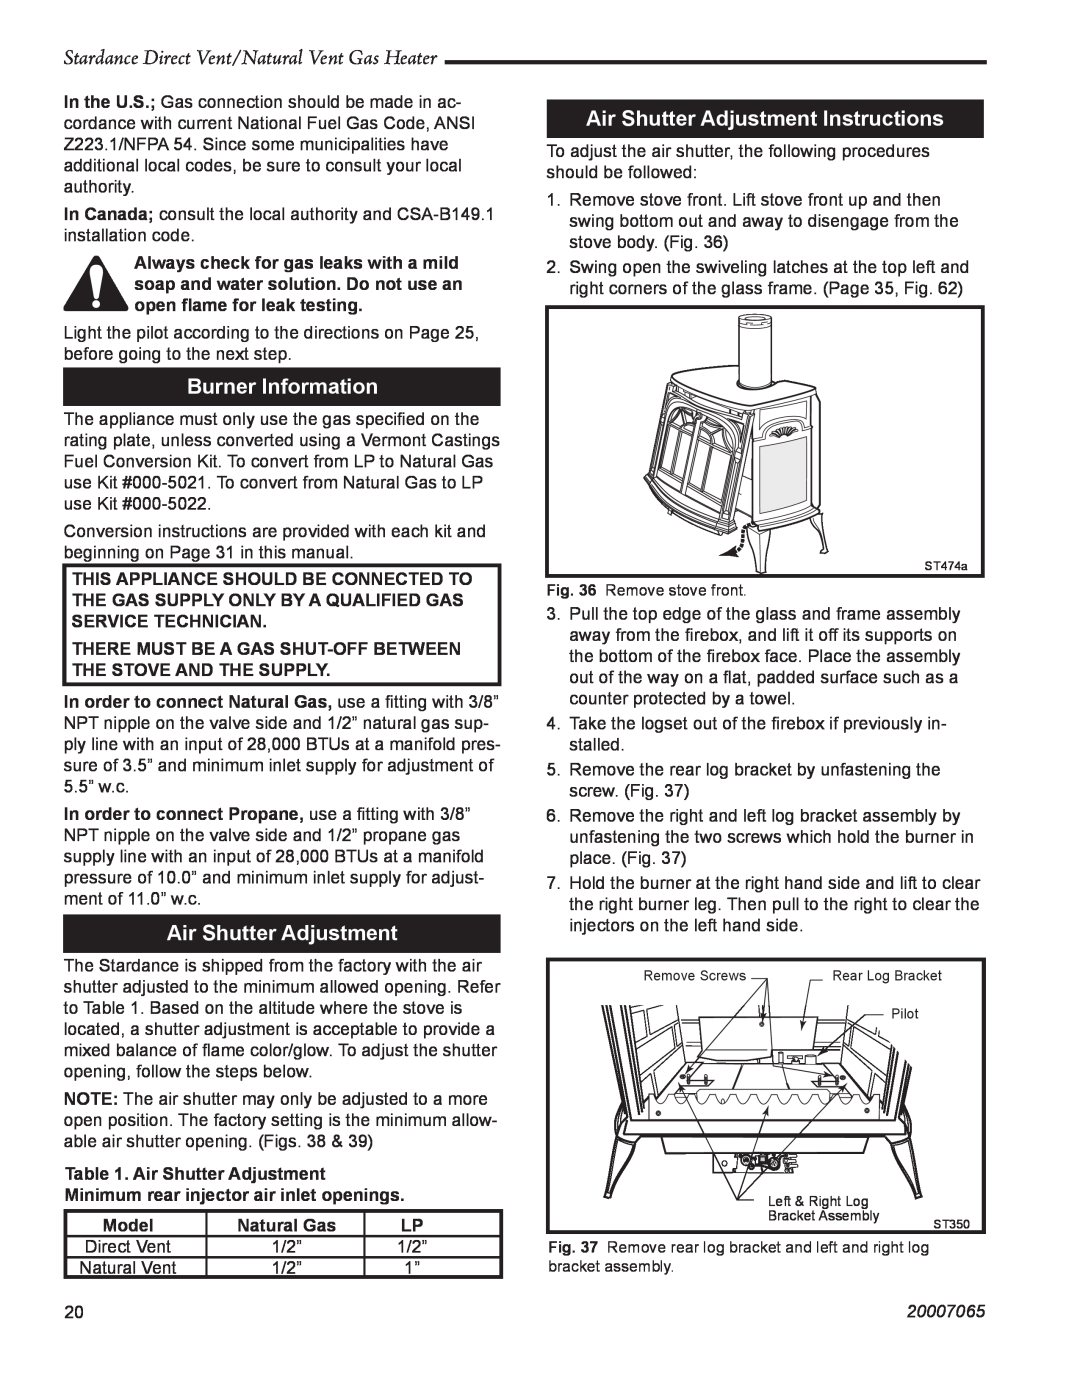 Vermont Casting SDV30 manual Burner Information, Air Shutter Adjustment Instructions, 20007065 